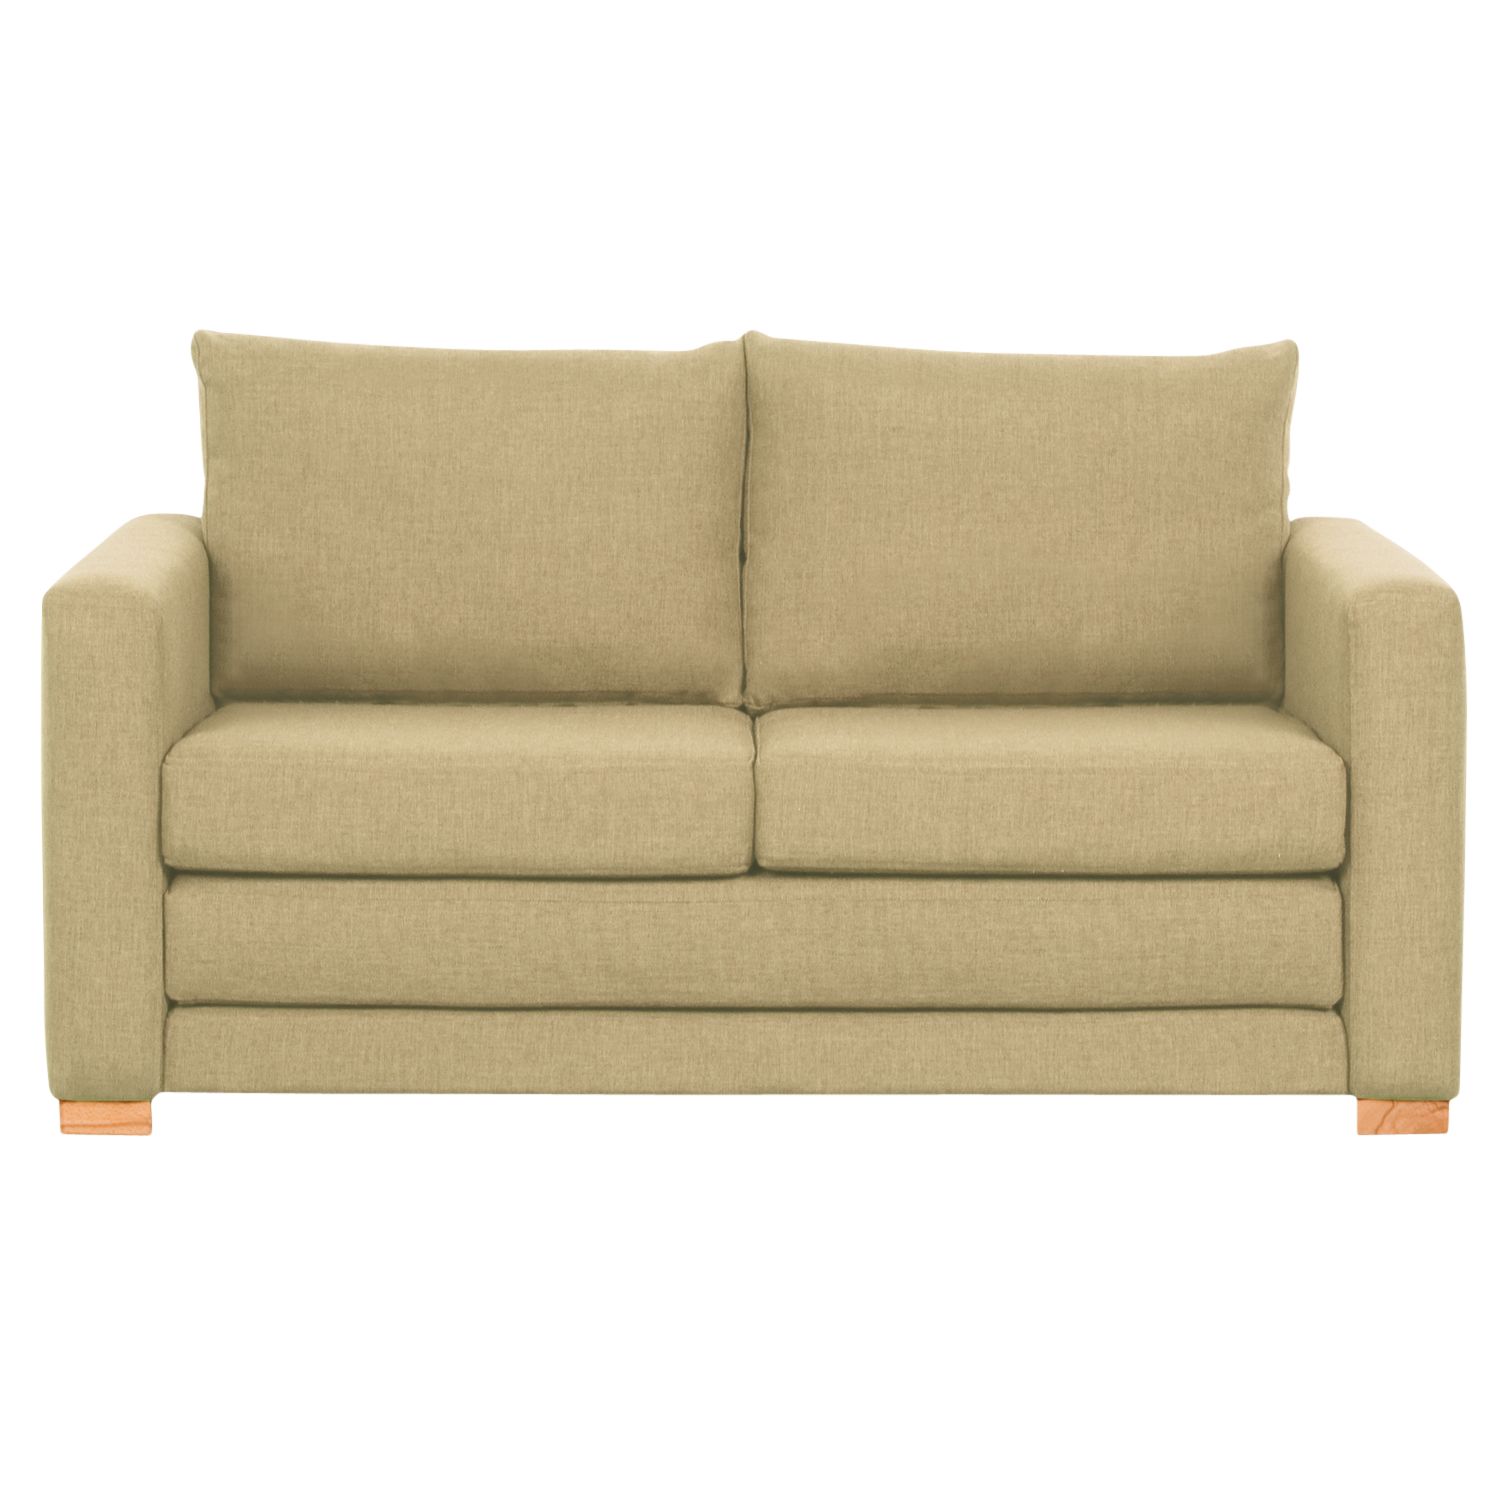 John Lewis Maisie Small Sofa Bed, Wheat / Light Leg, width 142cm